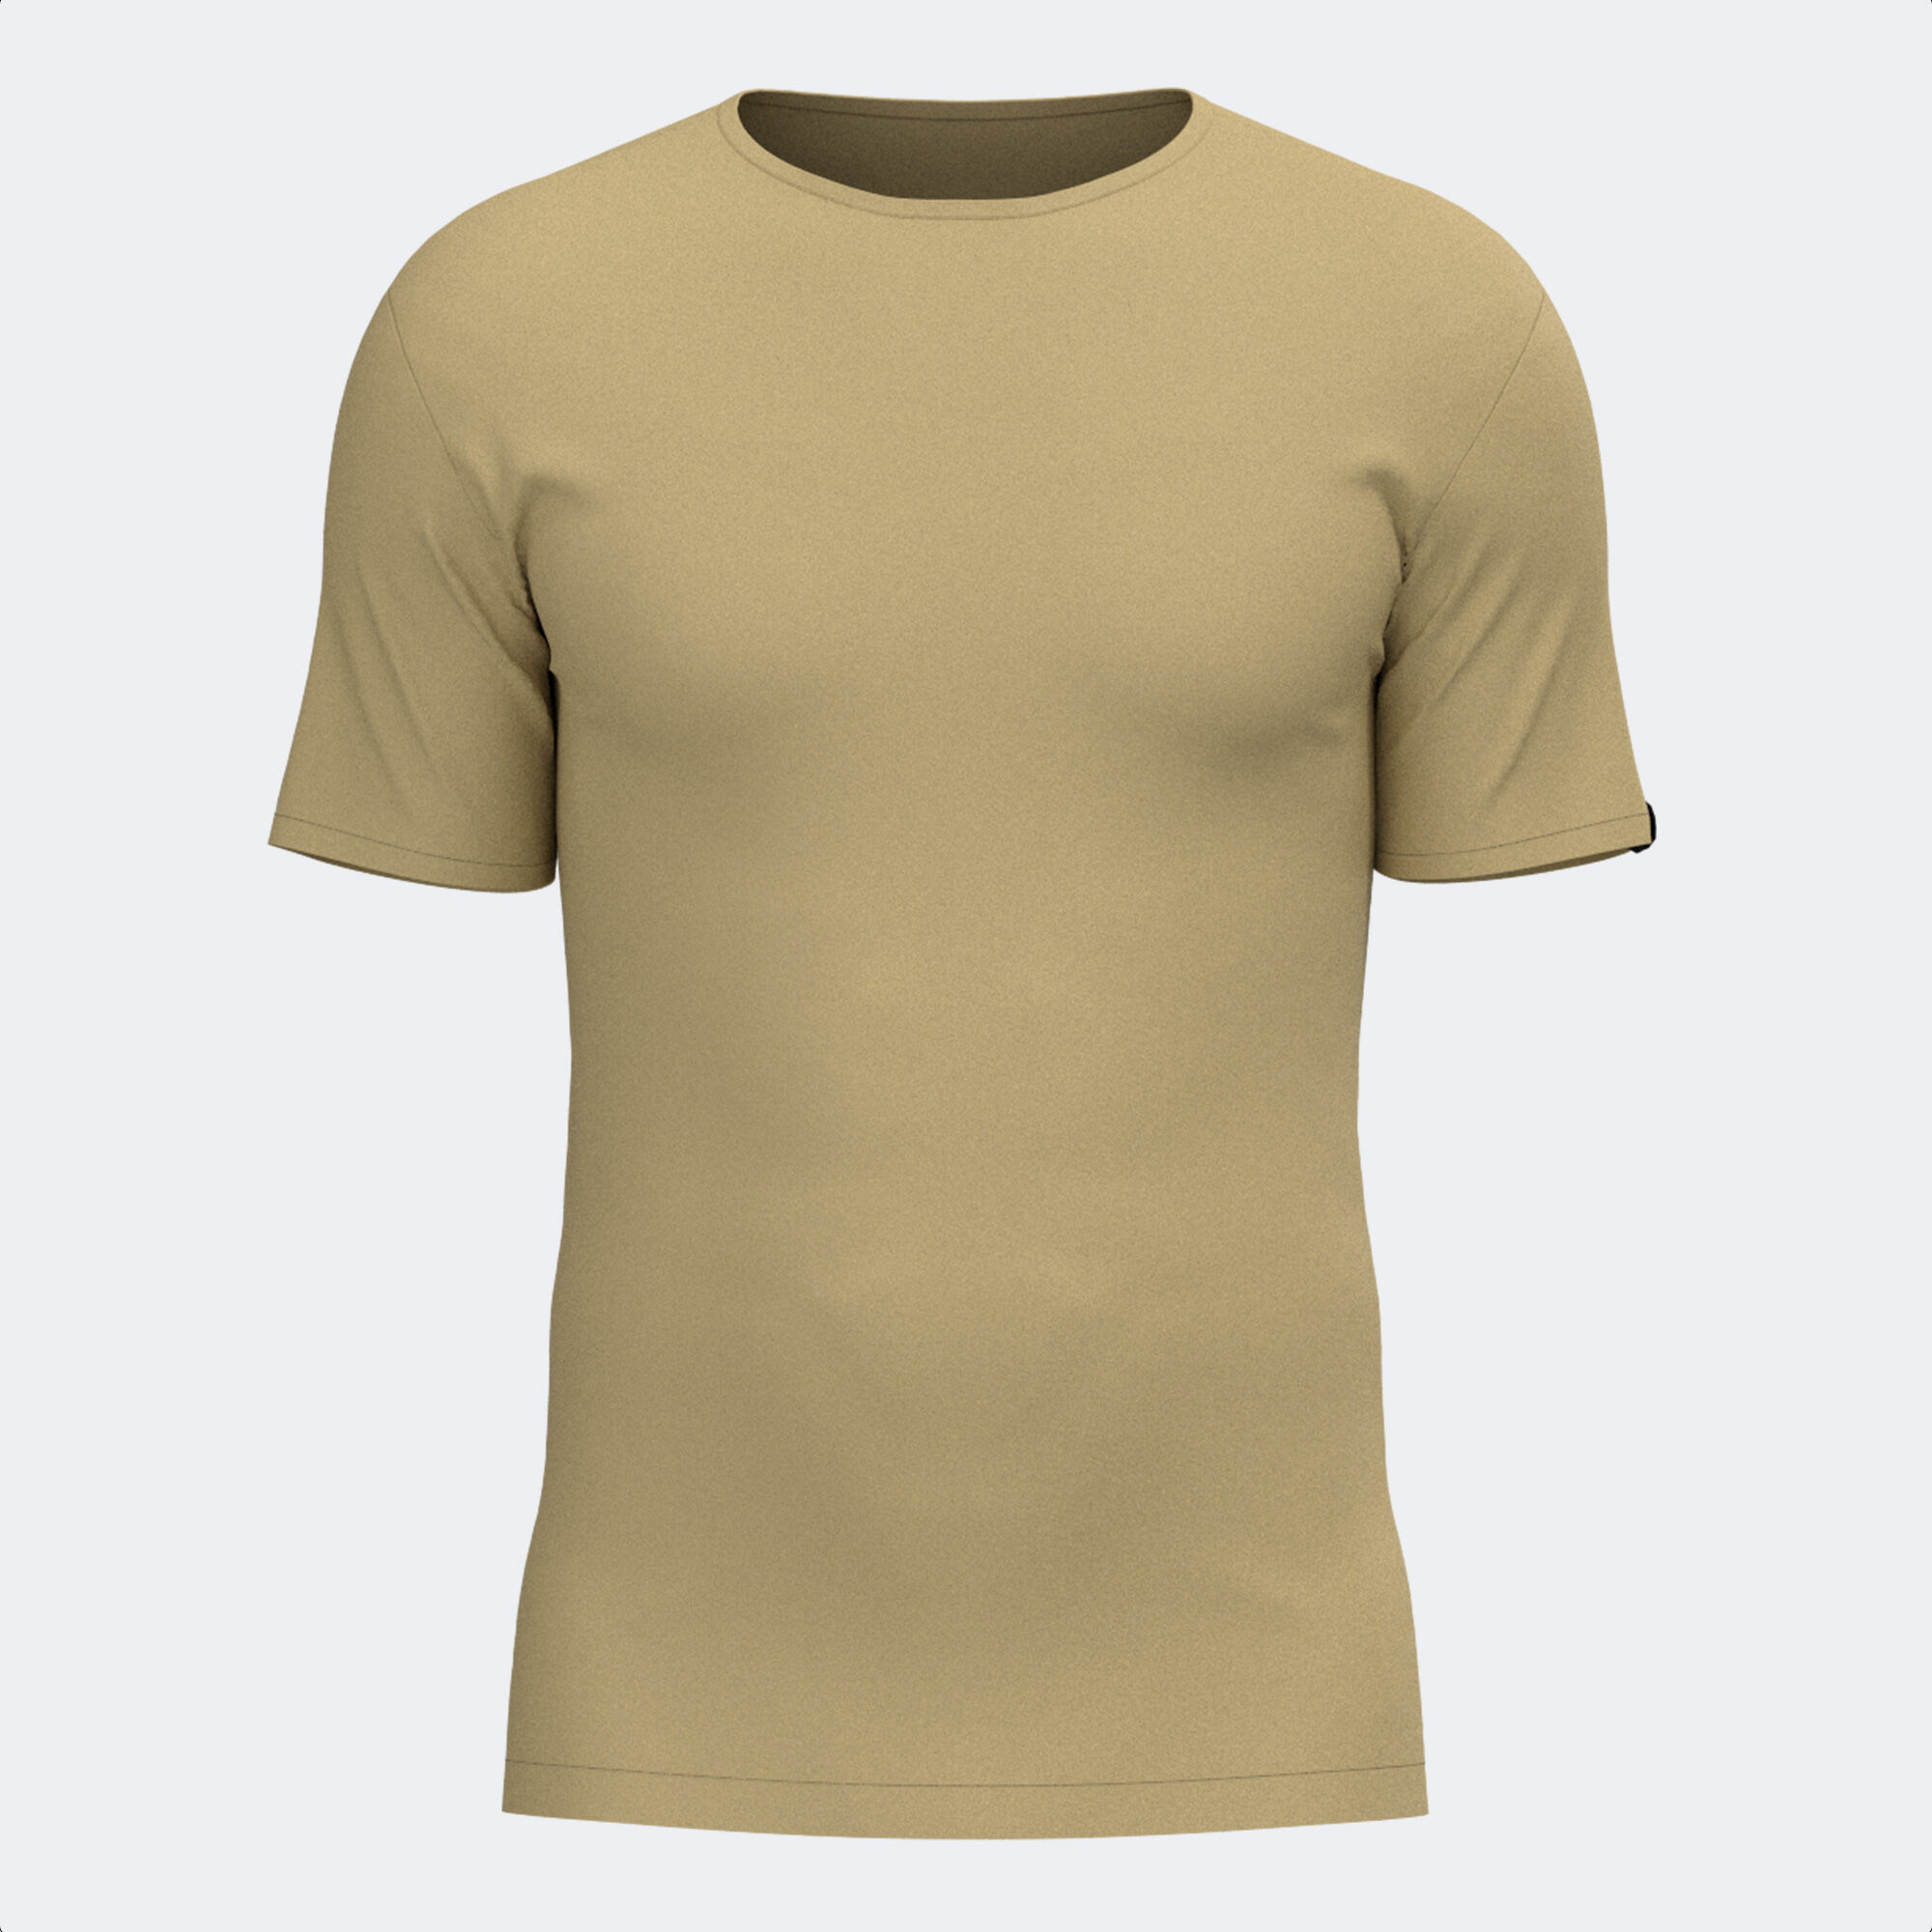 Camiseta manga corta hombre Desert beige